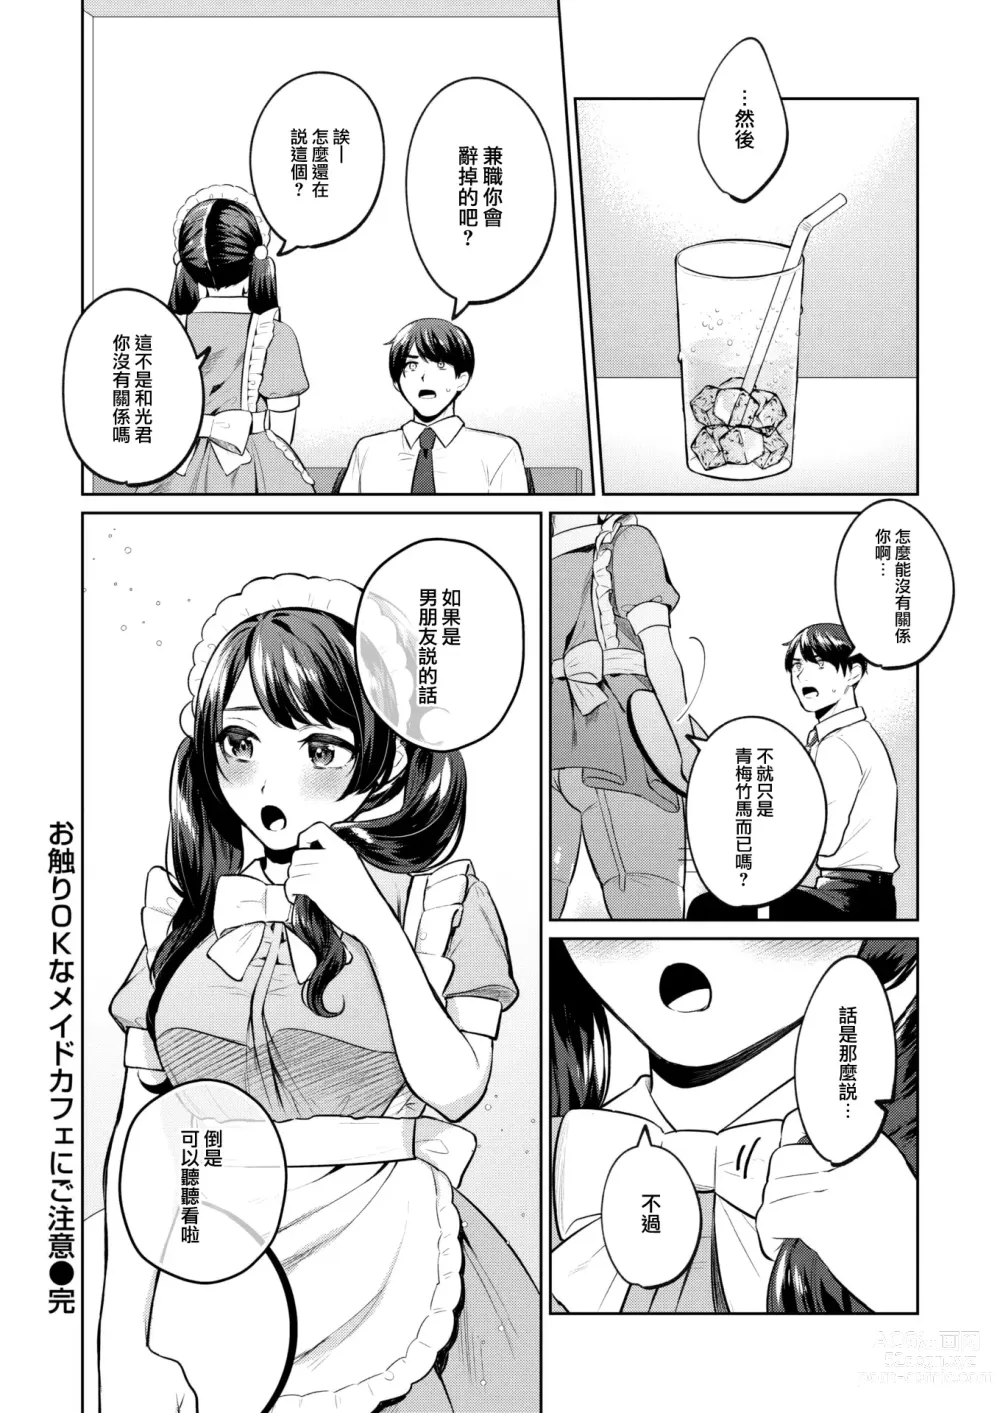 Page 25 of manga Osawari OK na Maid Cafe ni Gochuui